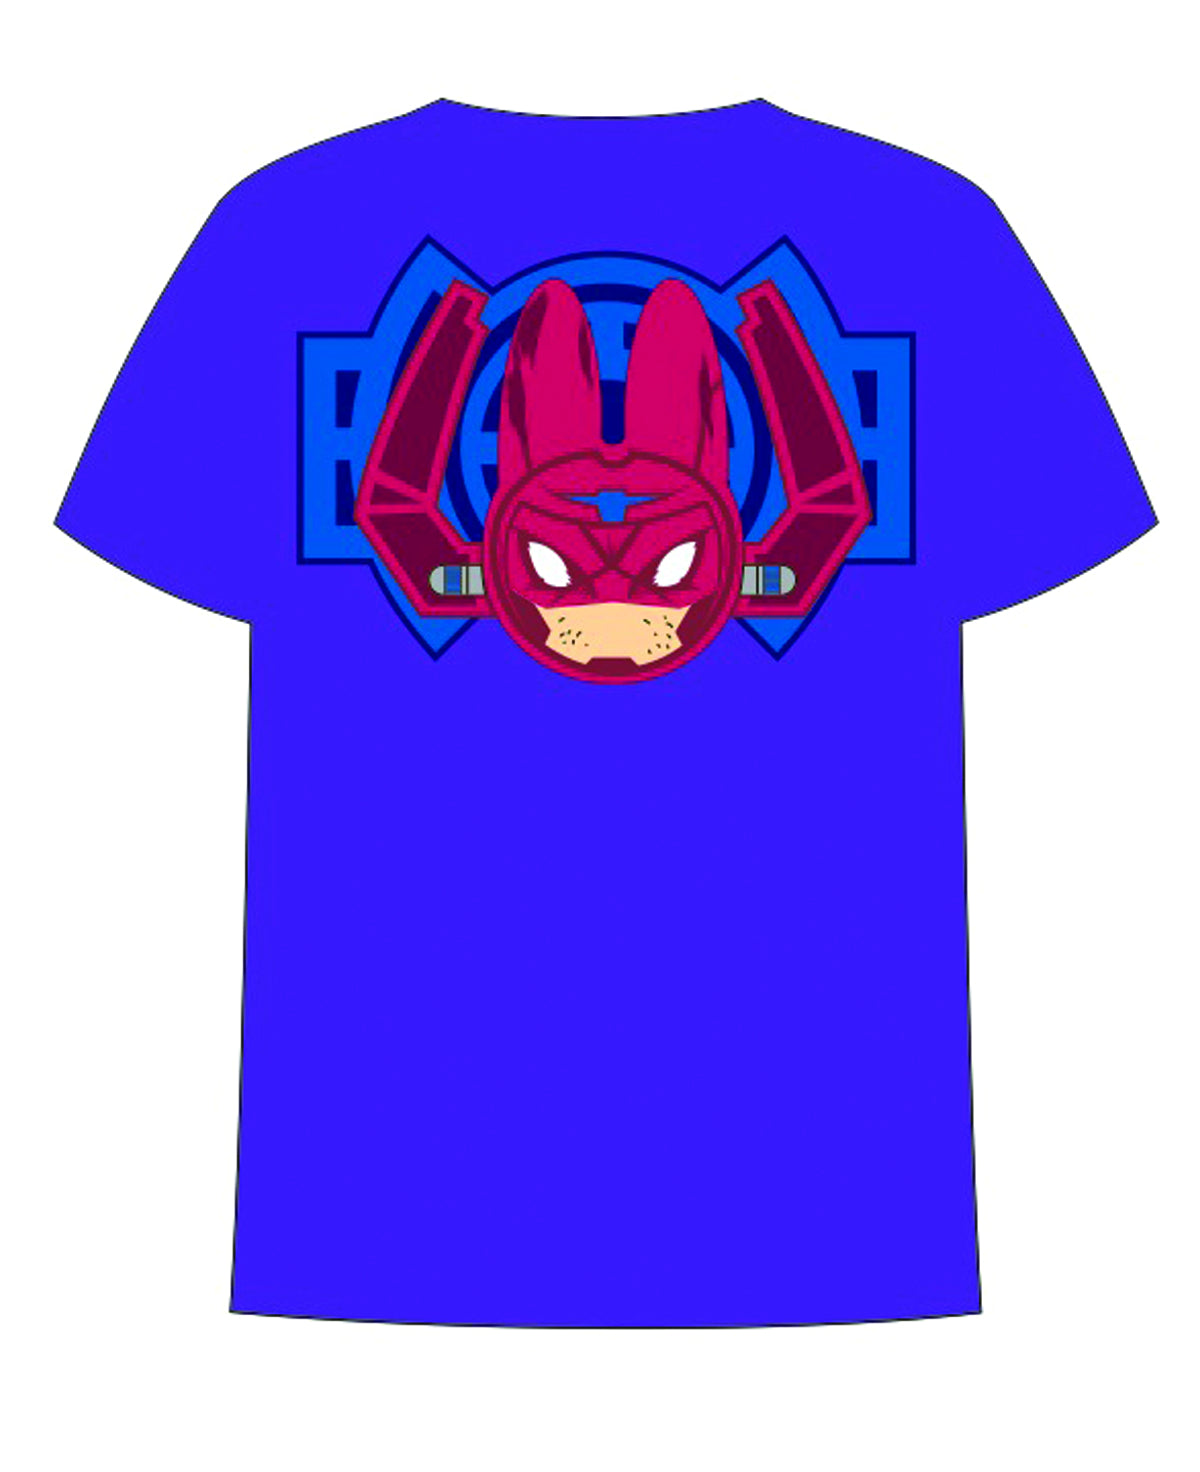 Galactus Labbit PX Purple T-Shirt Adult Medium